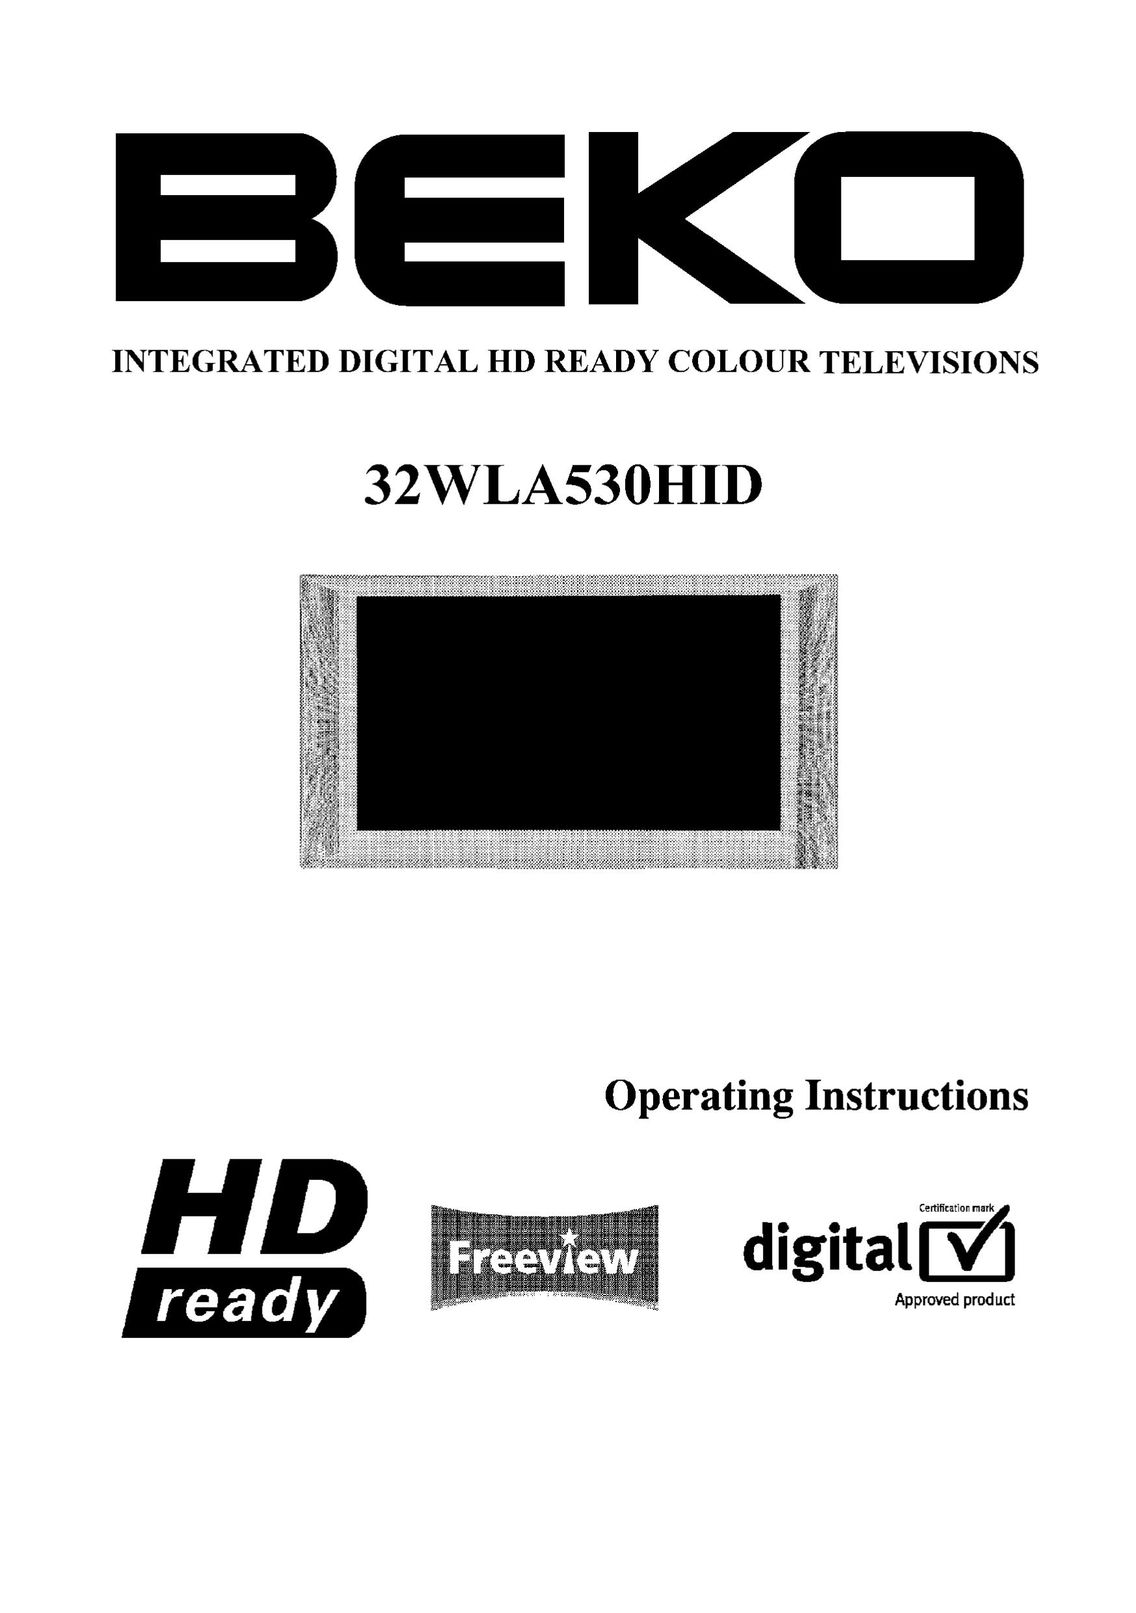 Beko 32WLA530HID CRT Television User Manual